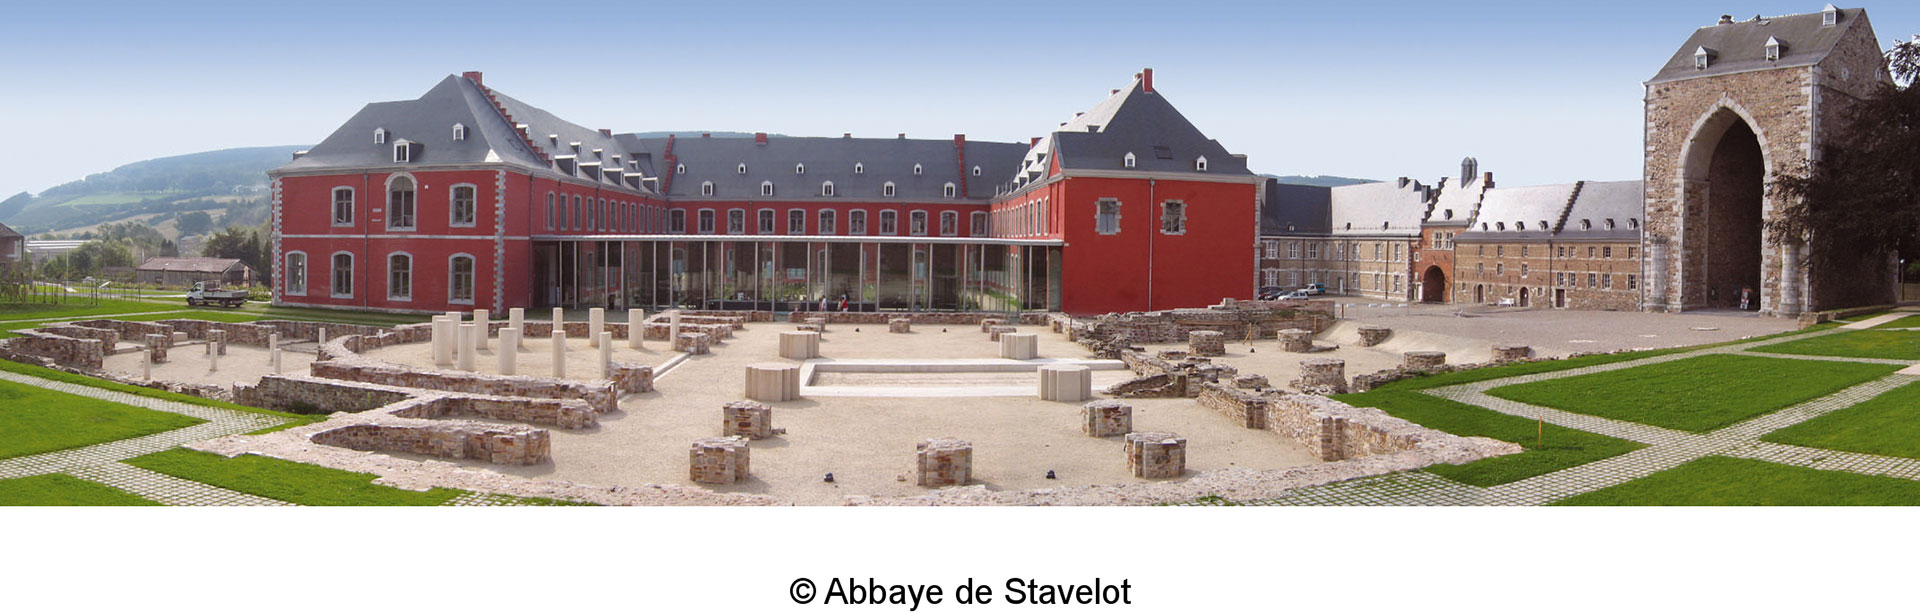 Abbaye - Stavelot - Espaces - Tourisme - Culture - Wallonie insolite